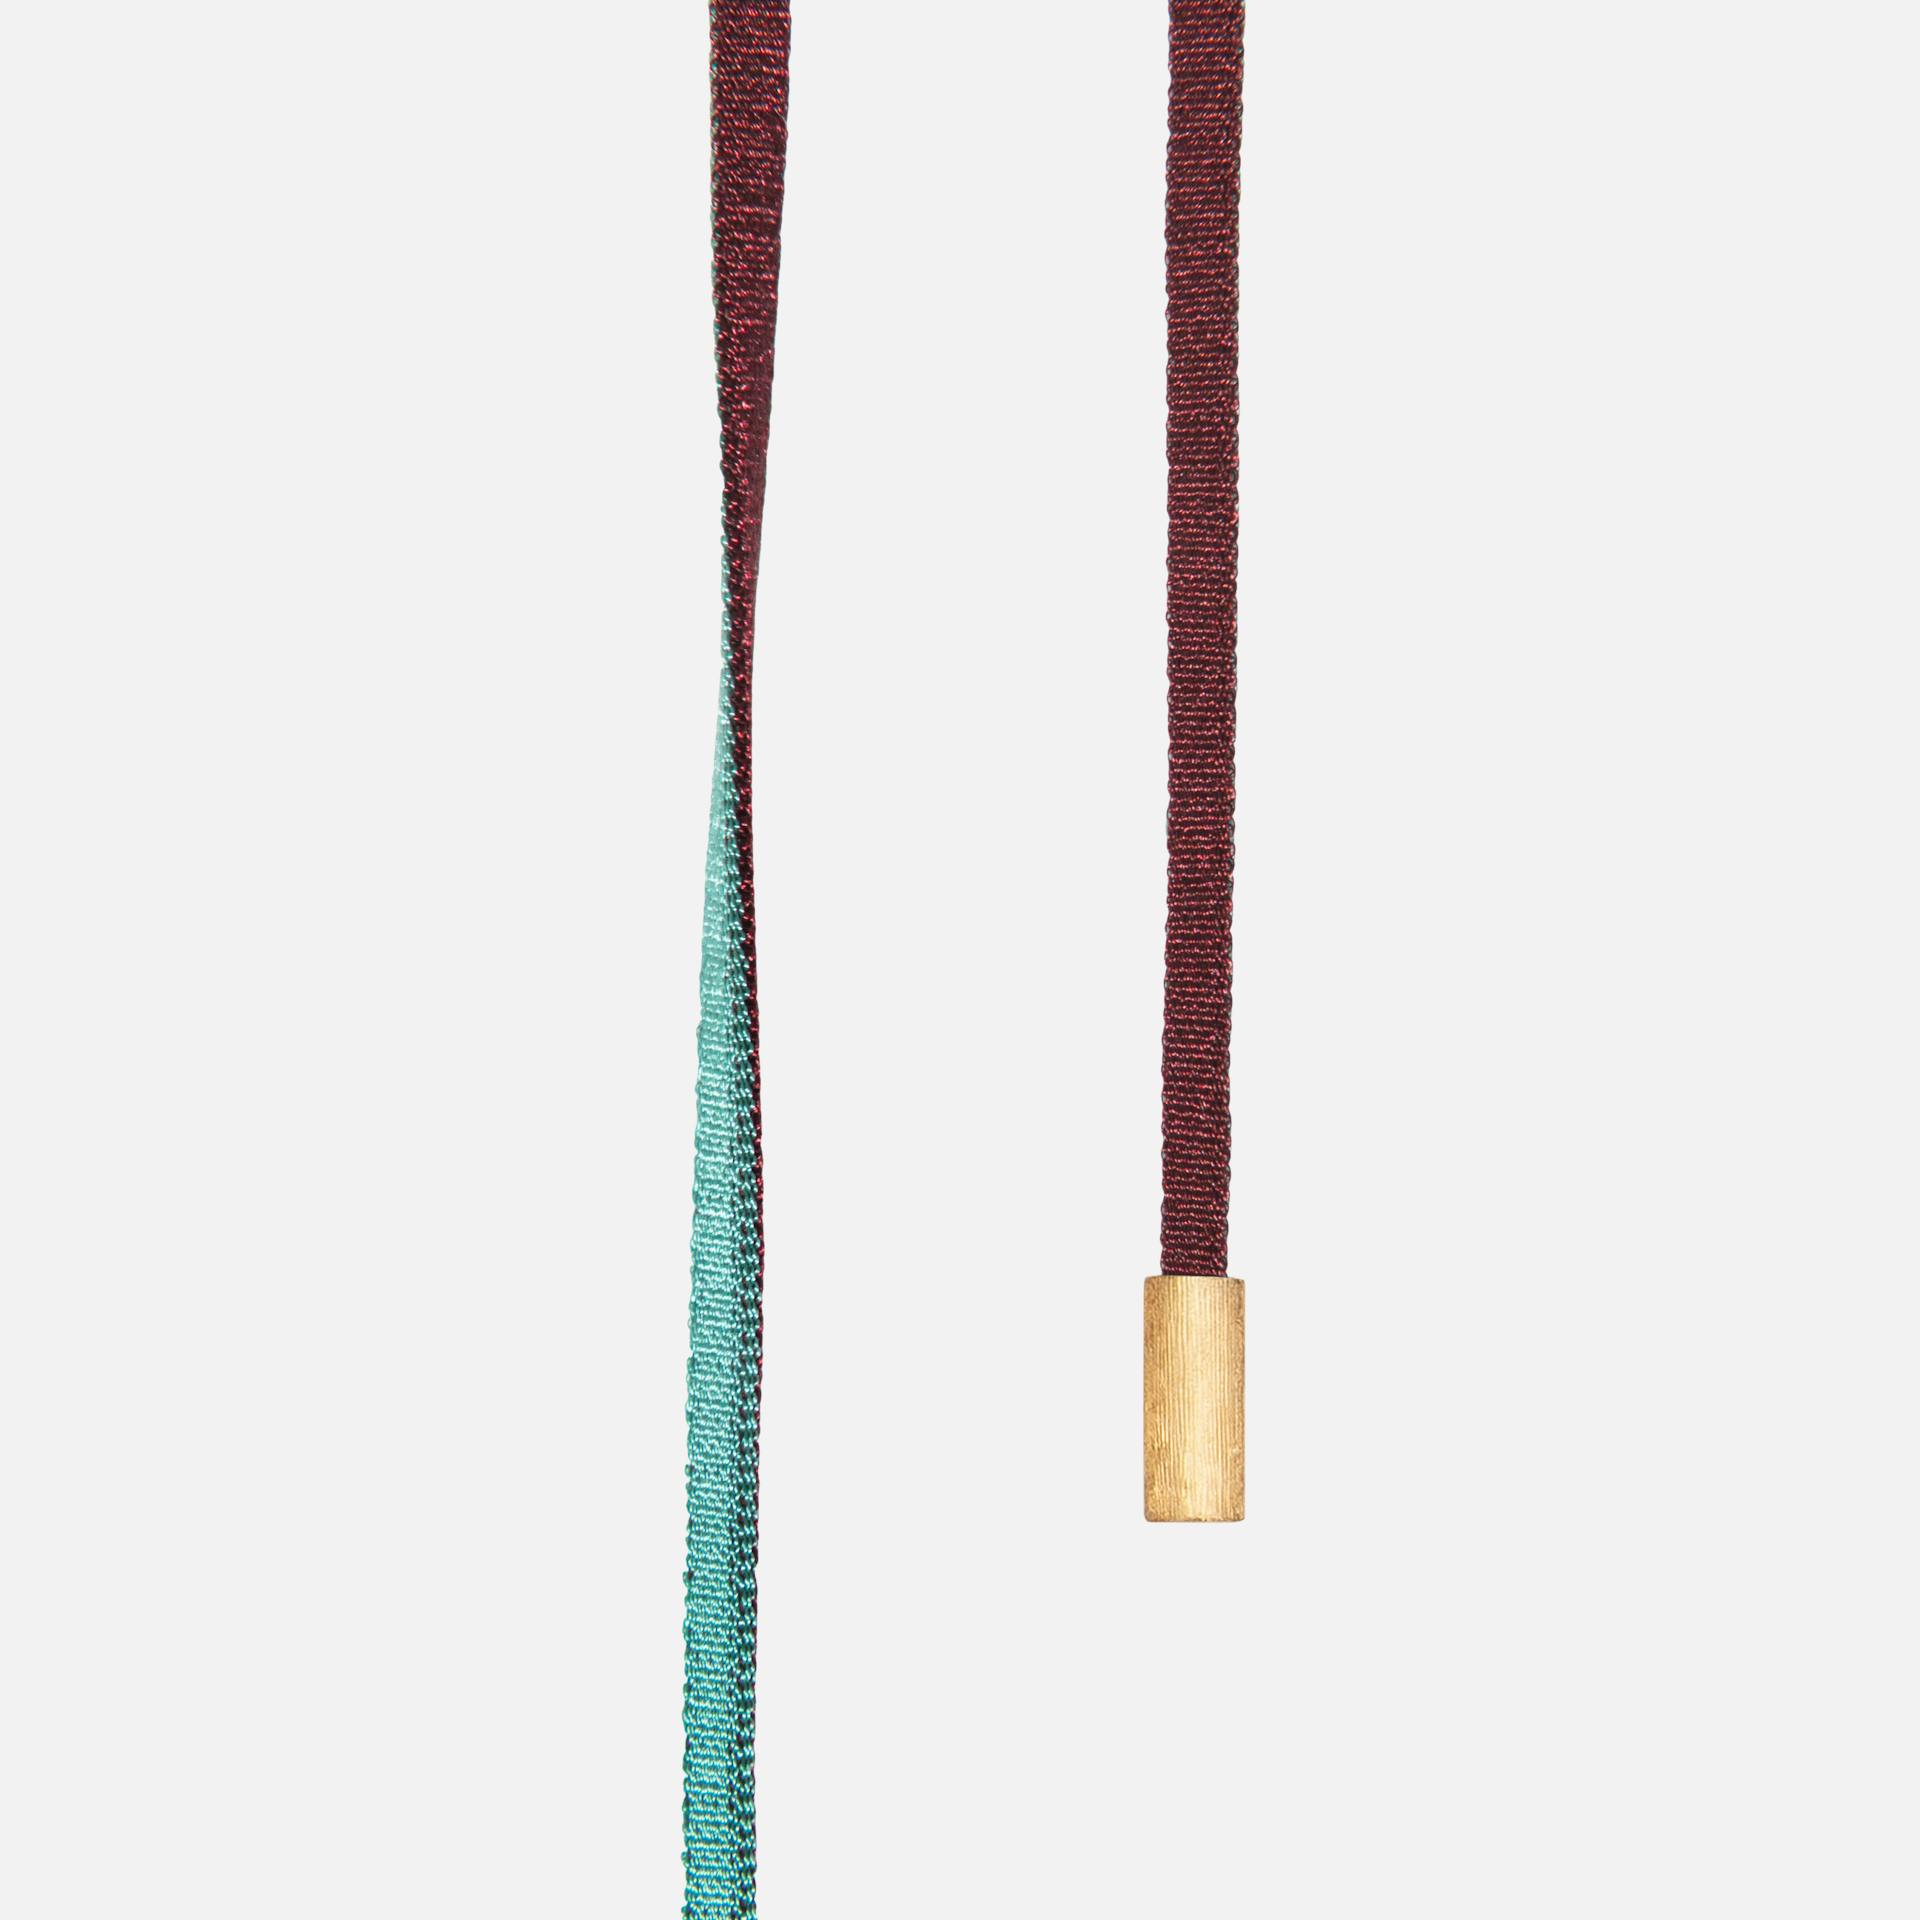 Silk String Necklace with 18 Karat Yellow Gold End Pieces  |  Ole Lynggaard Copenhagen    